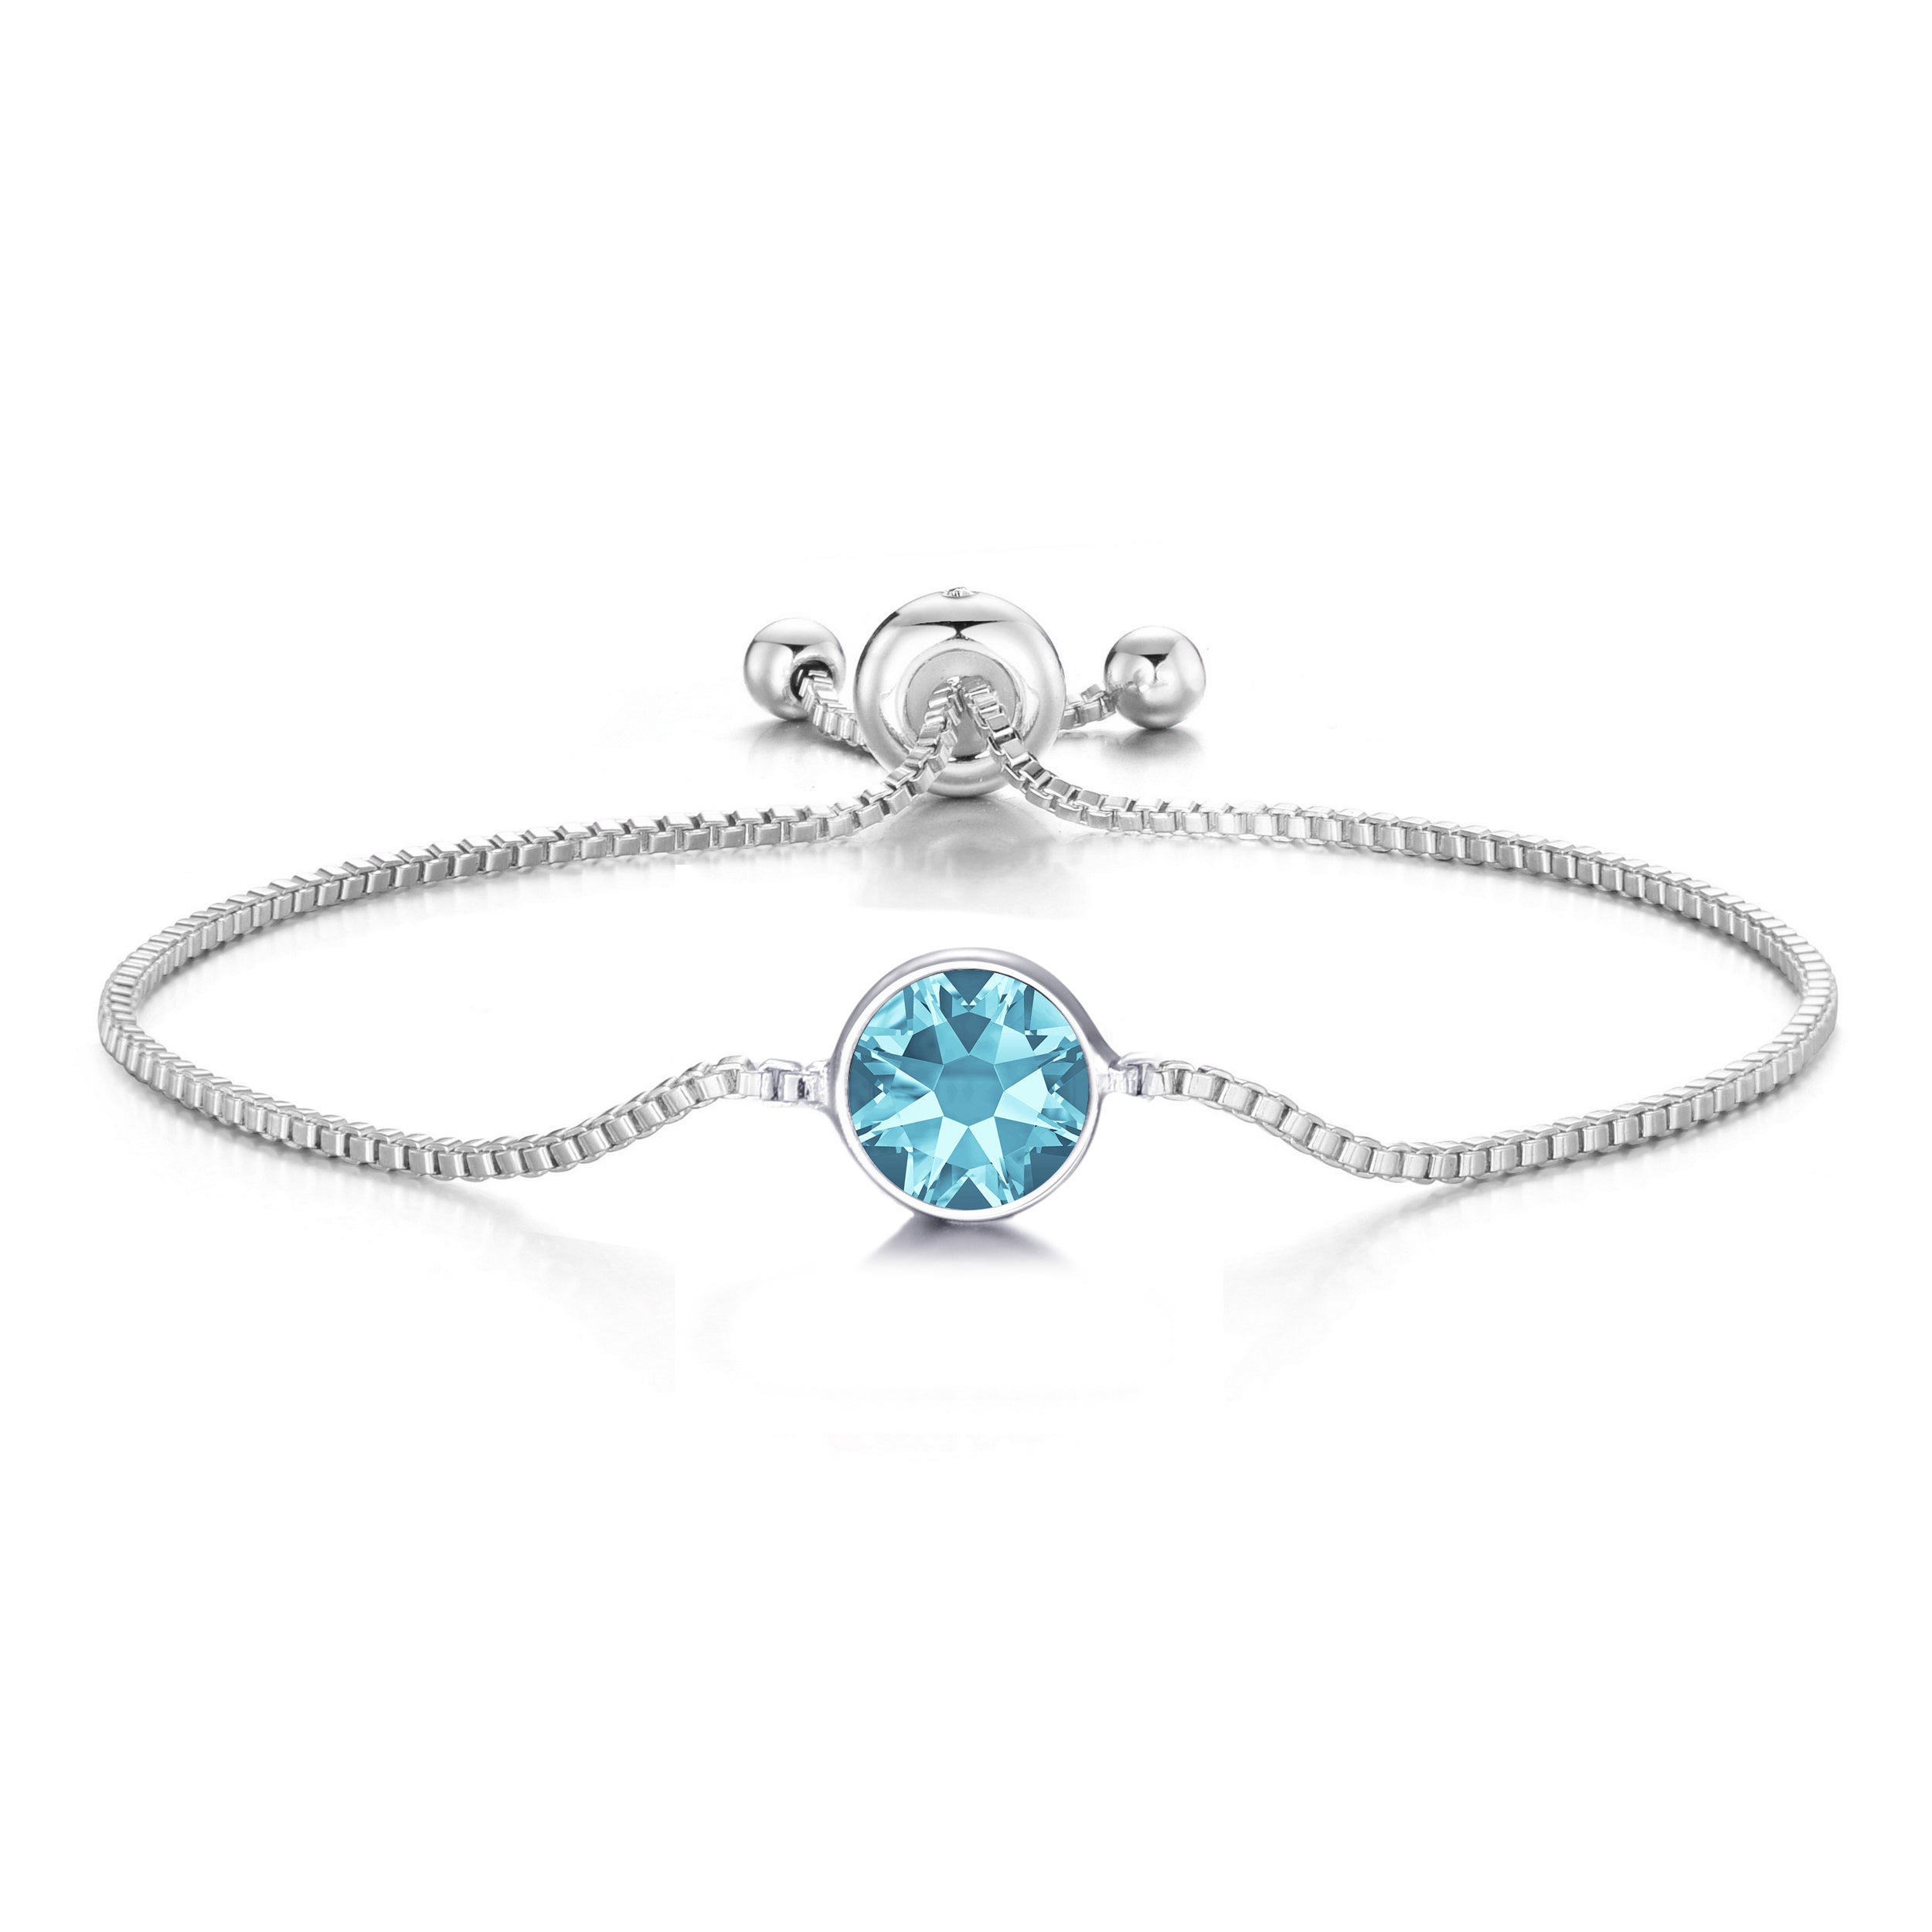 Light Blue Crystal Bracelet Created with Zircondia® Crystals by Philip Jones Jewellery